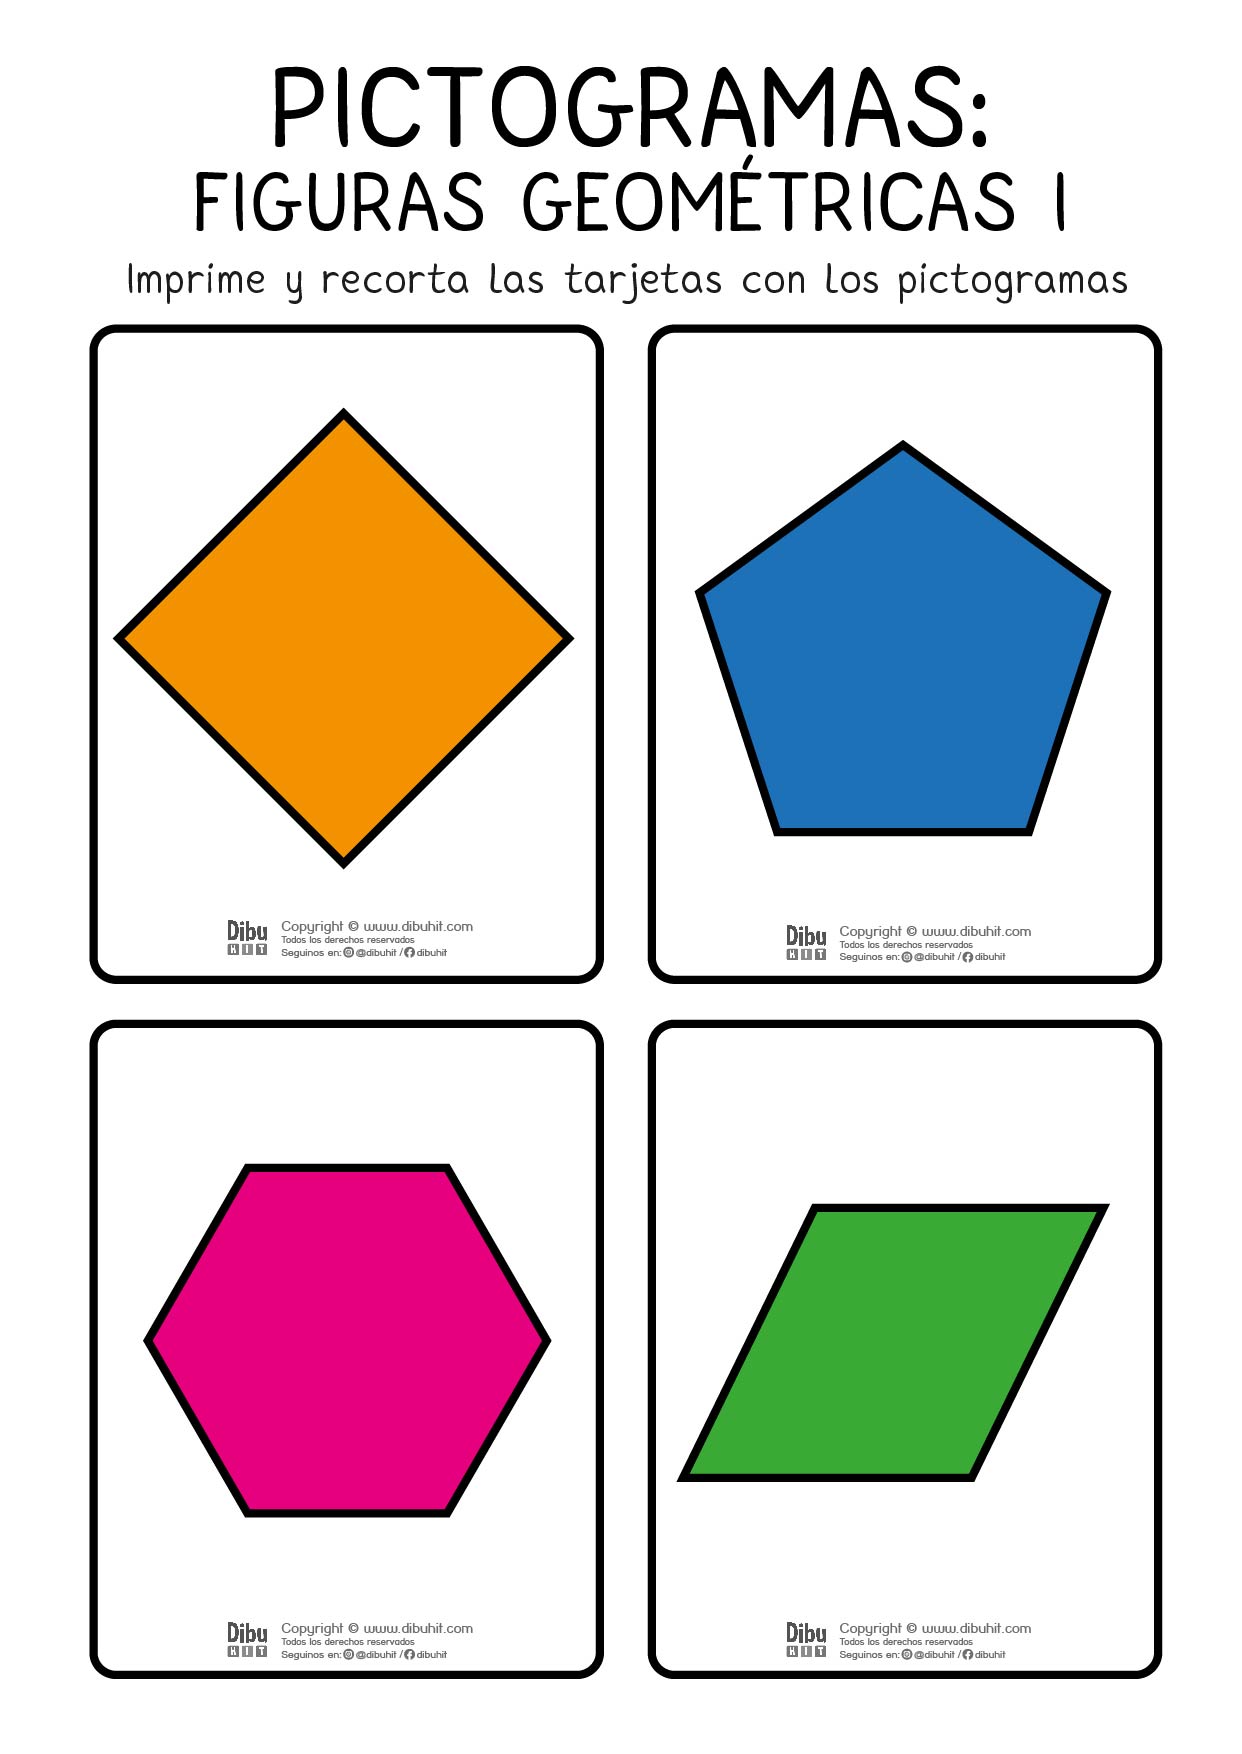 pictograma figuras geometricas rombo pentagono hexagono paralelogramo